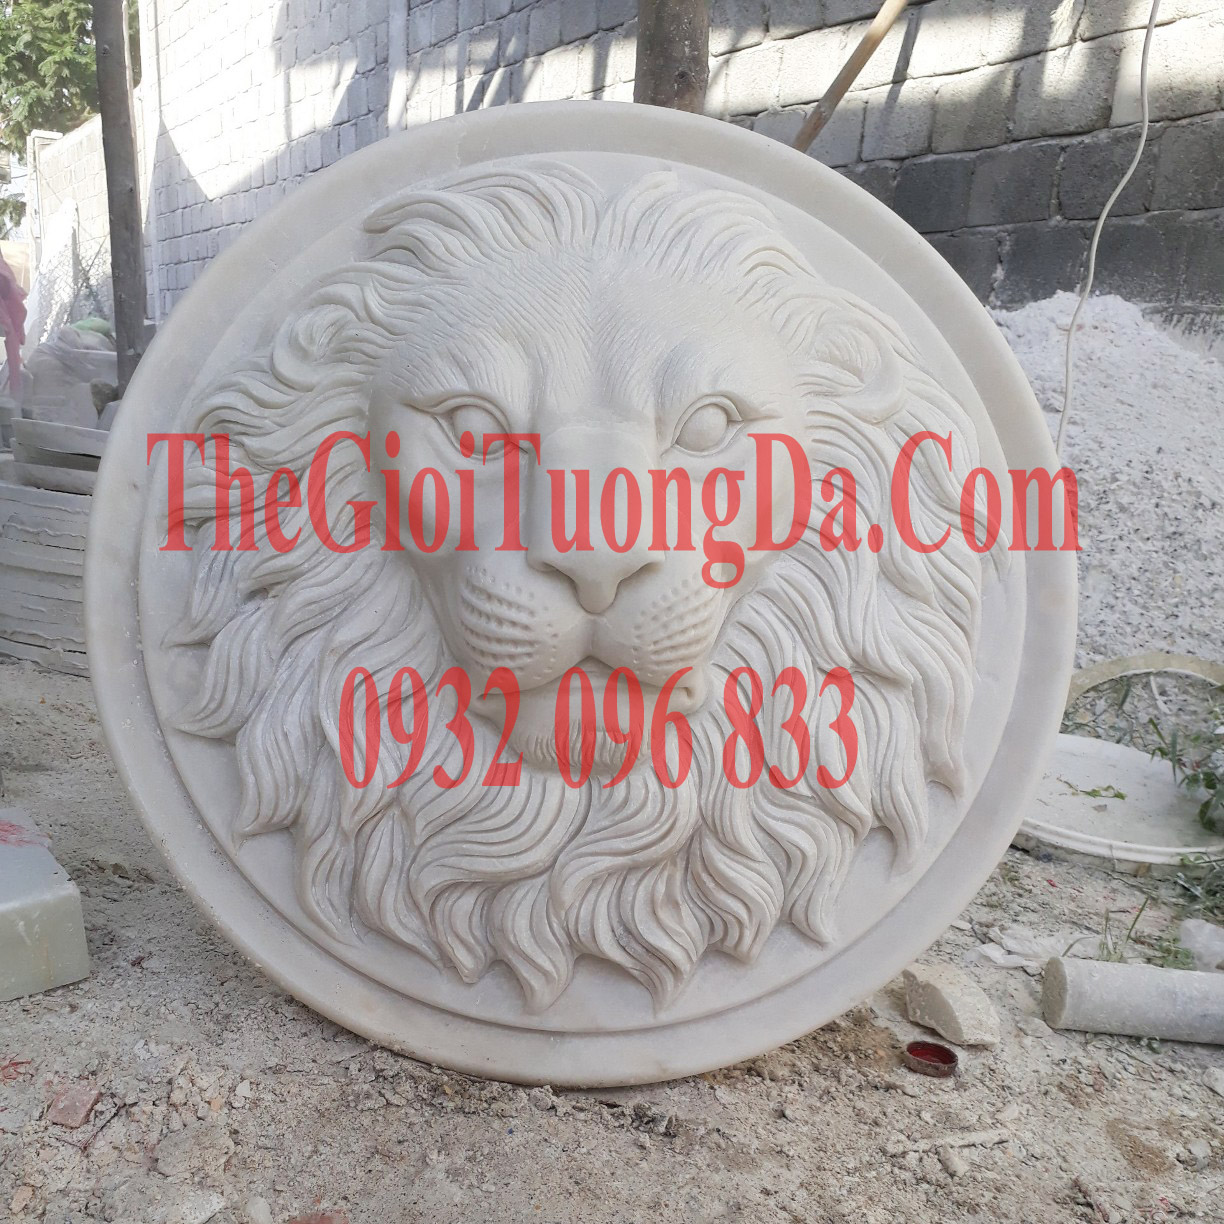 The Lion Head Statue